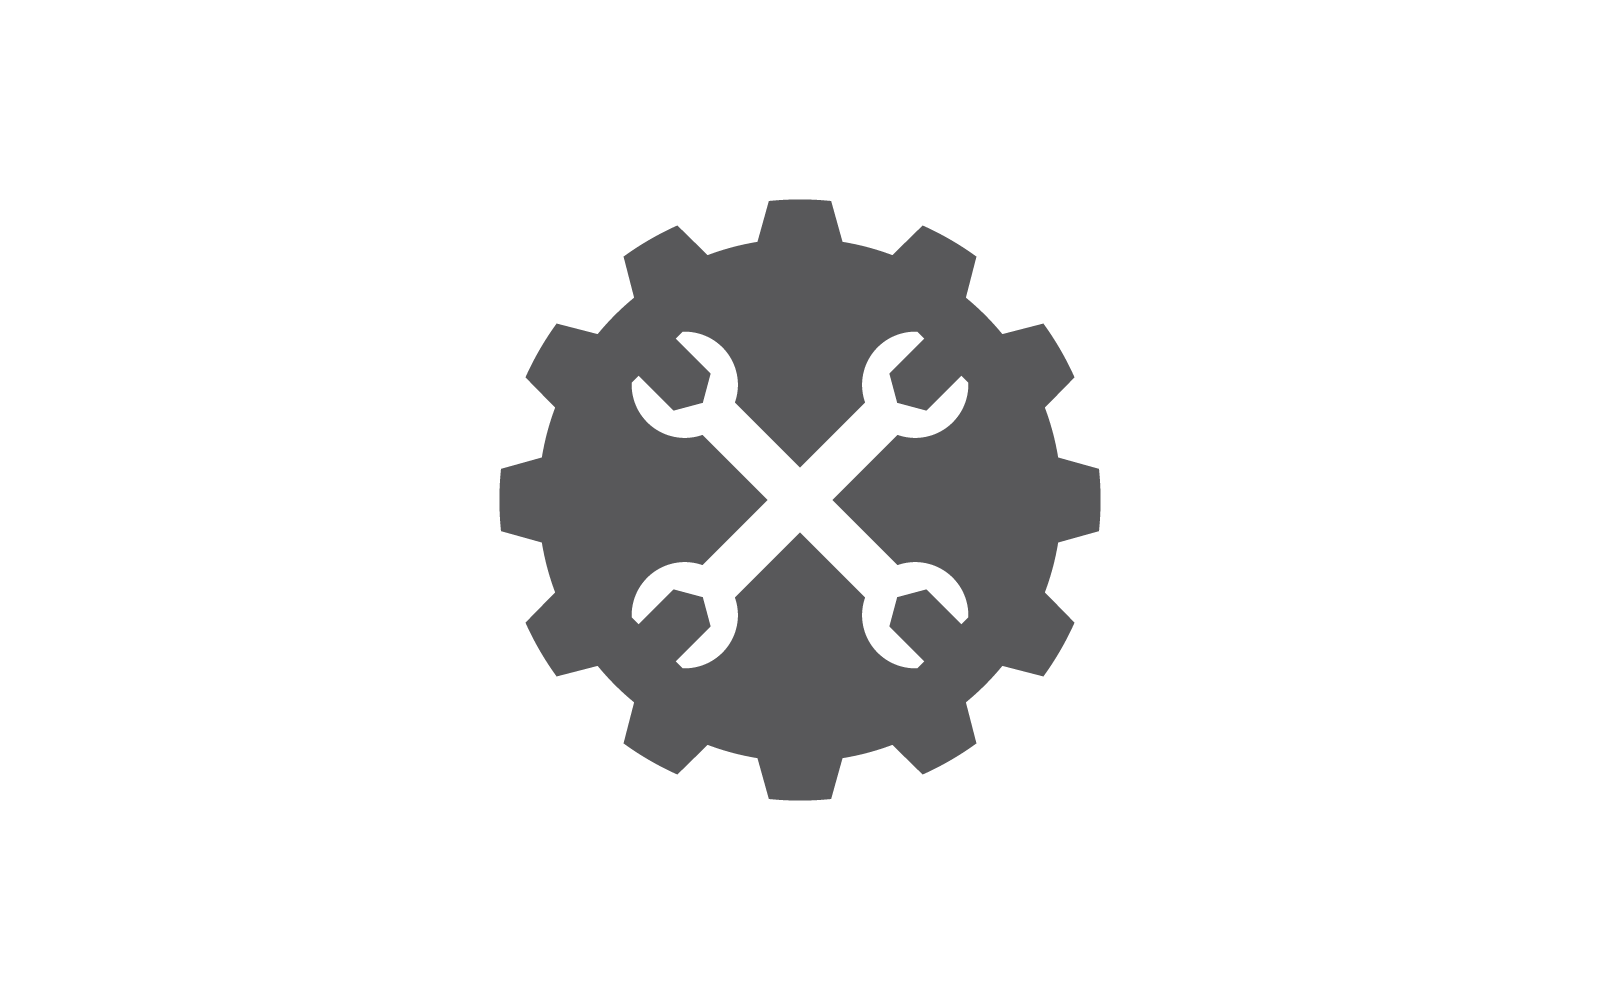 Wrench logo icon vector design template